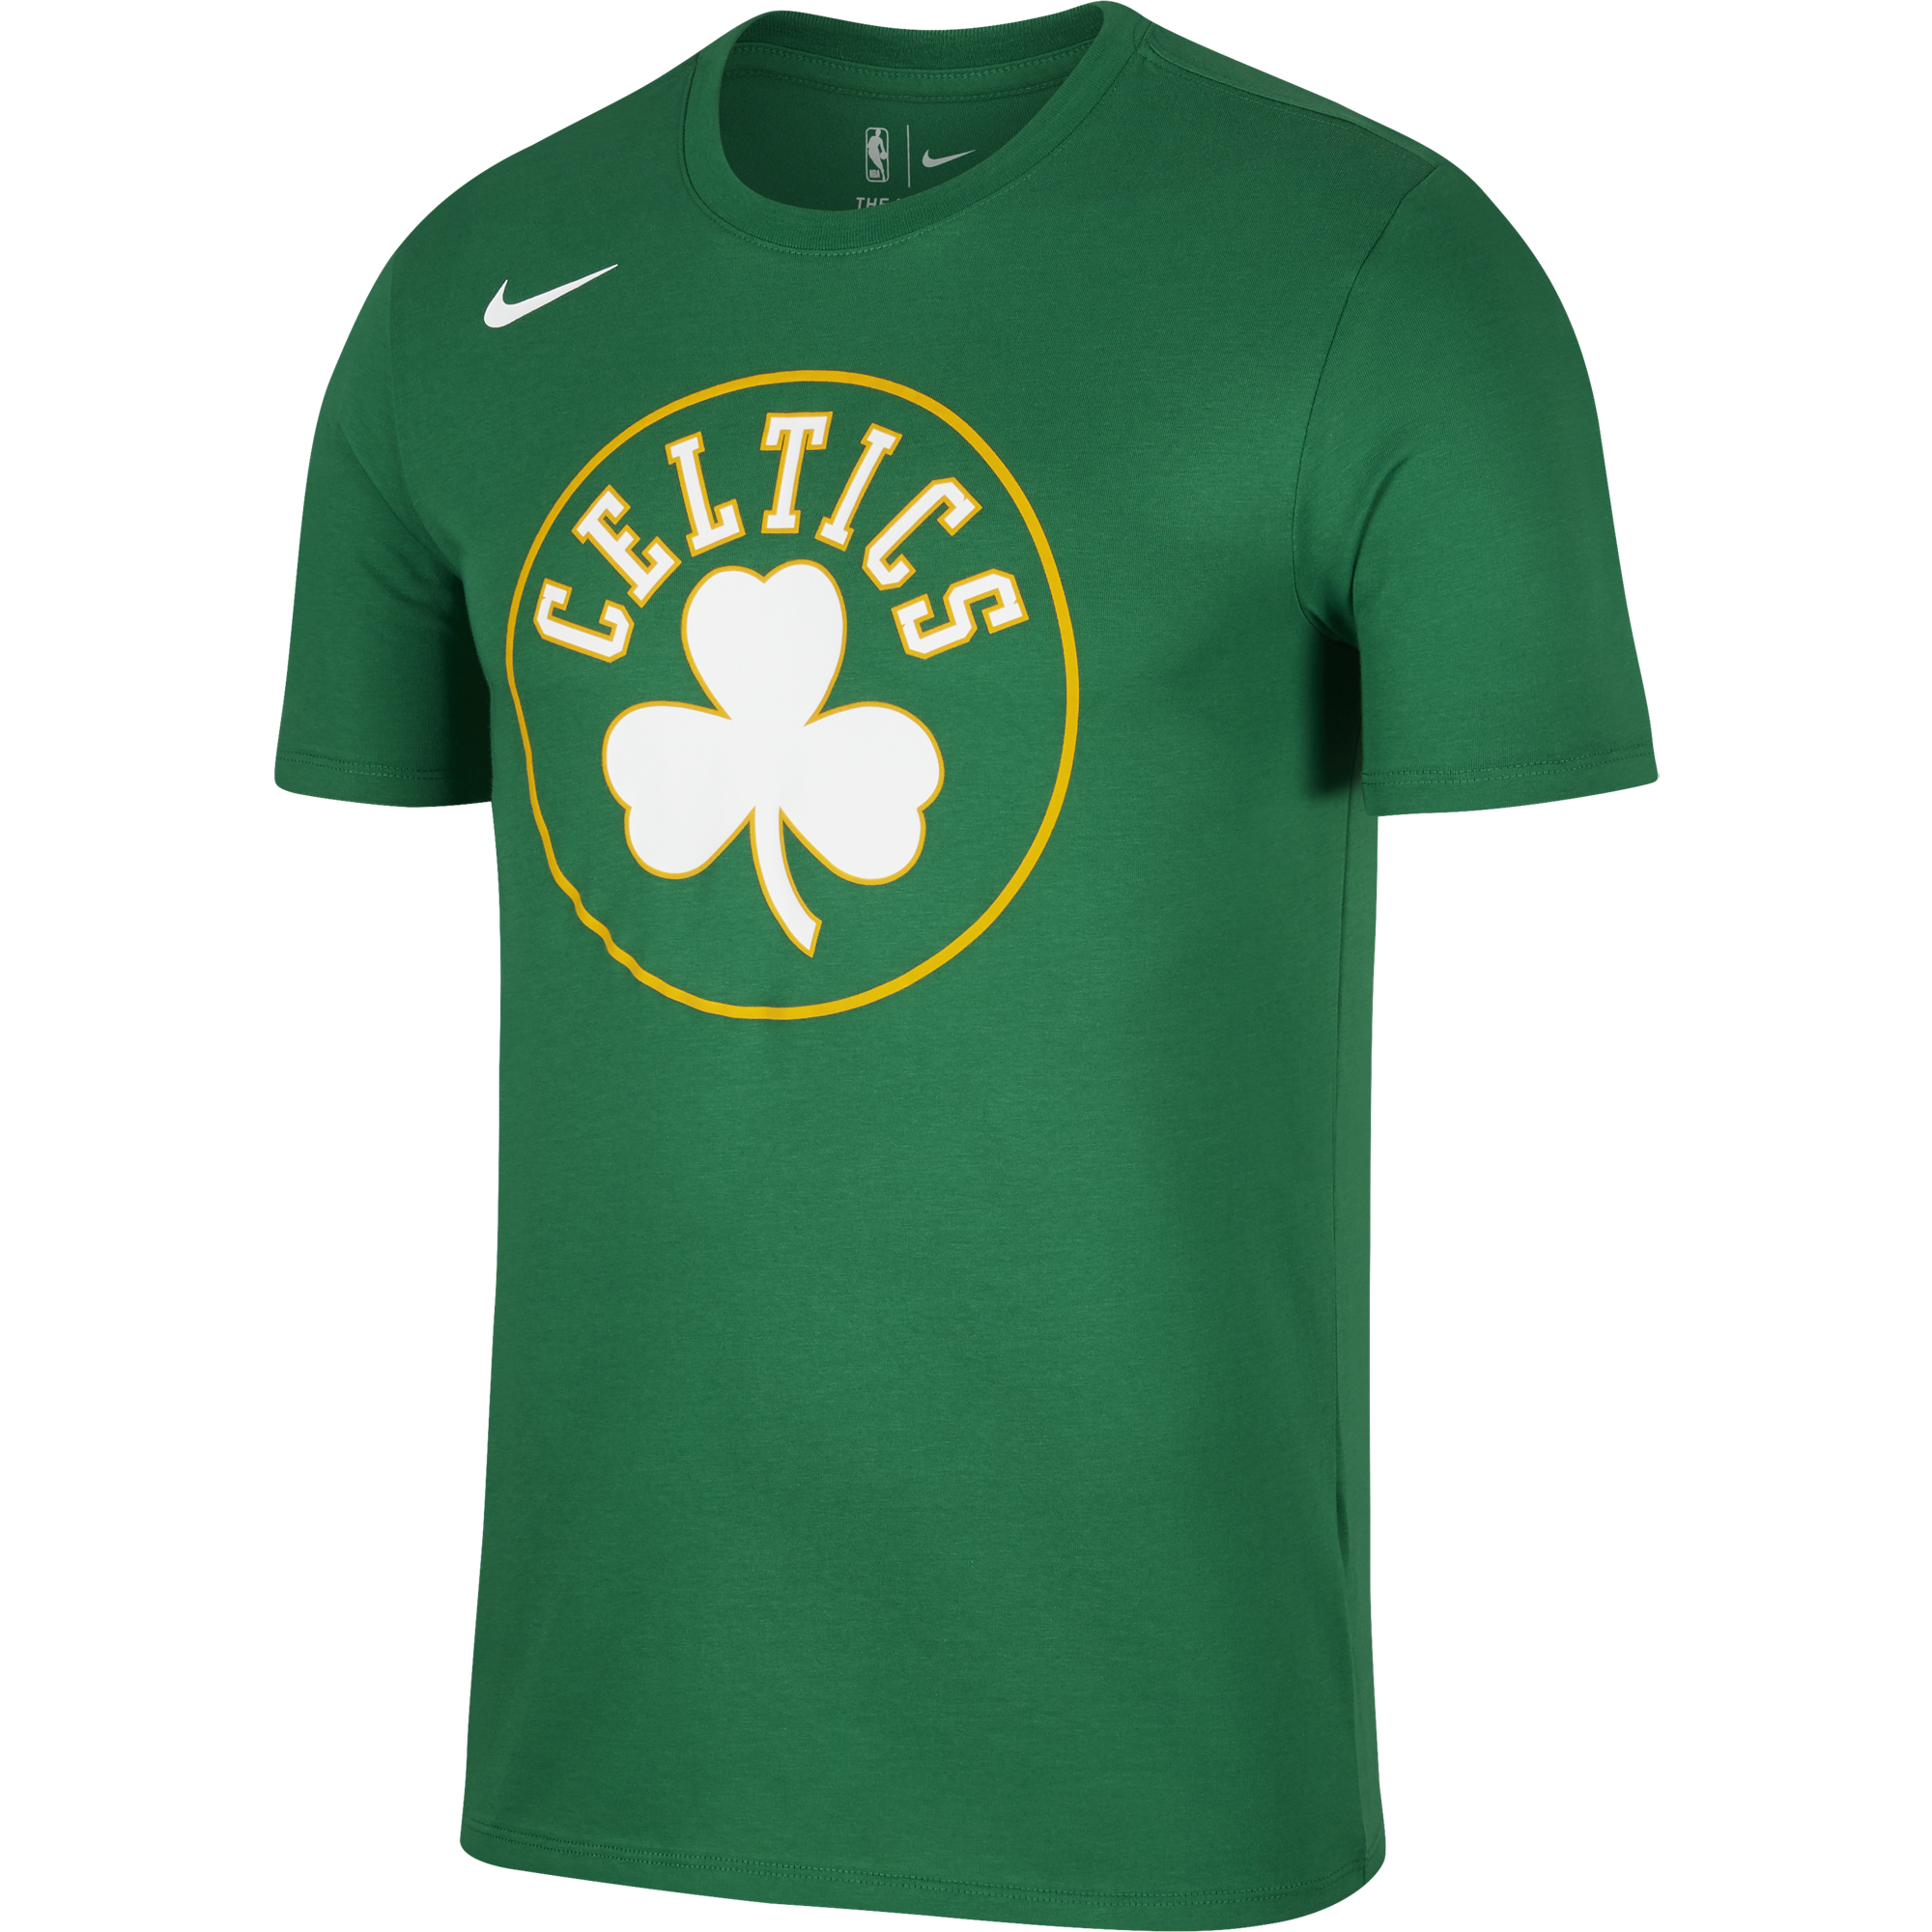 Nike Basketball NBA Boston Celtics unisex icon shorts in clover green